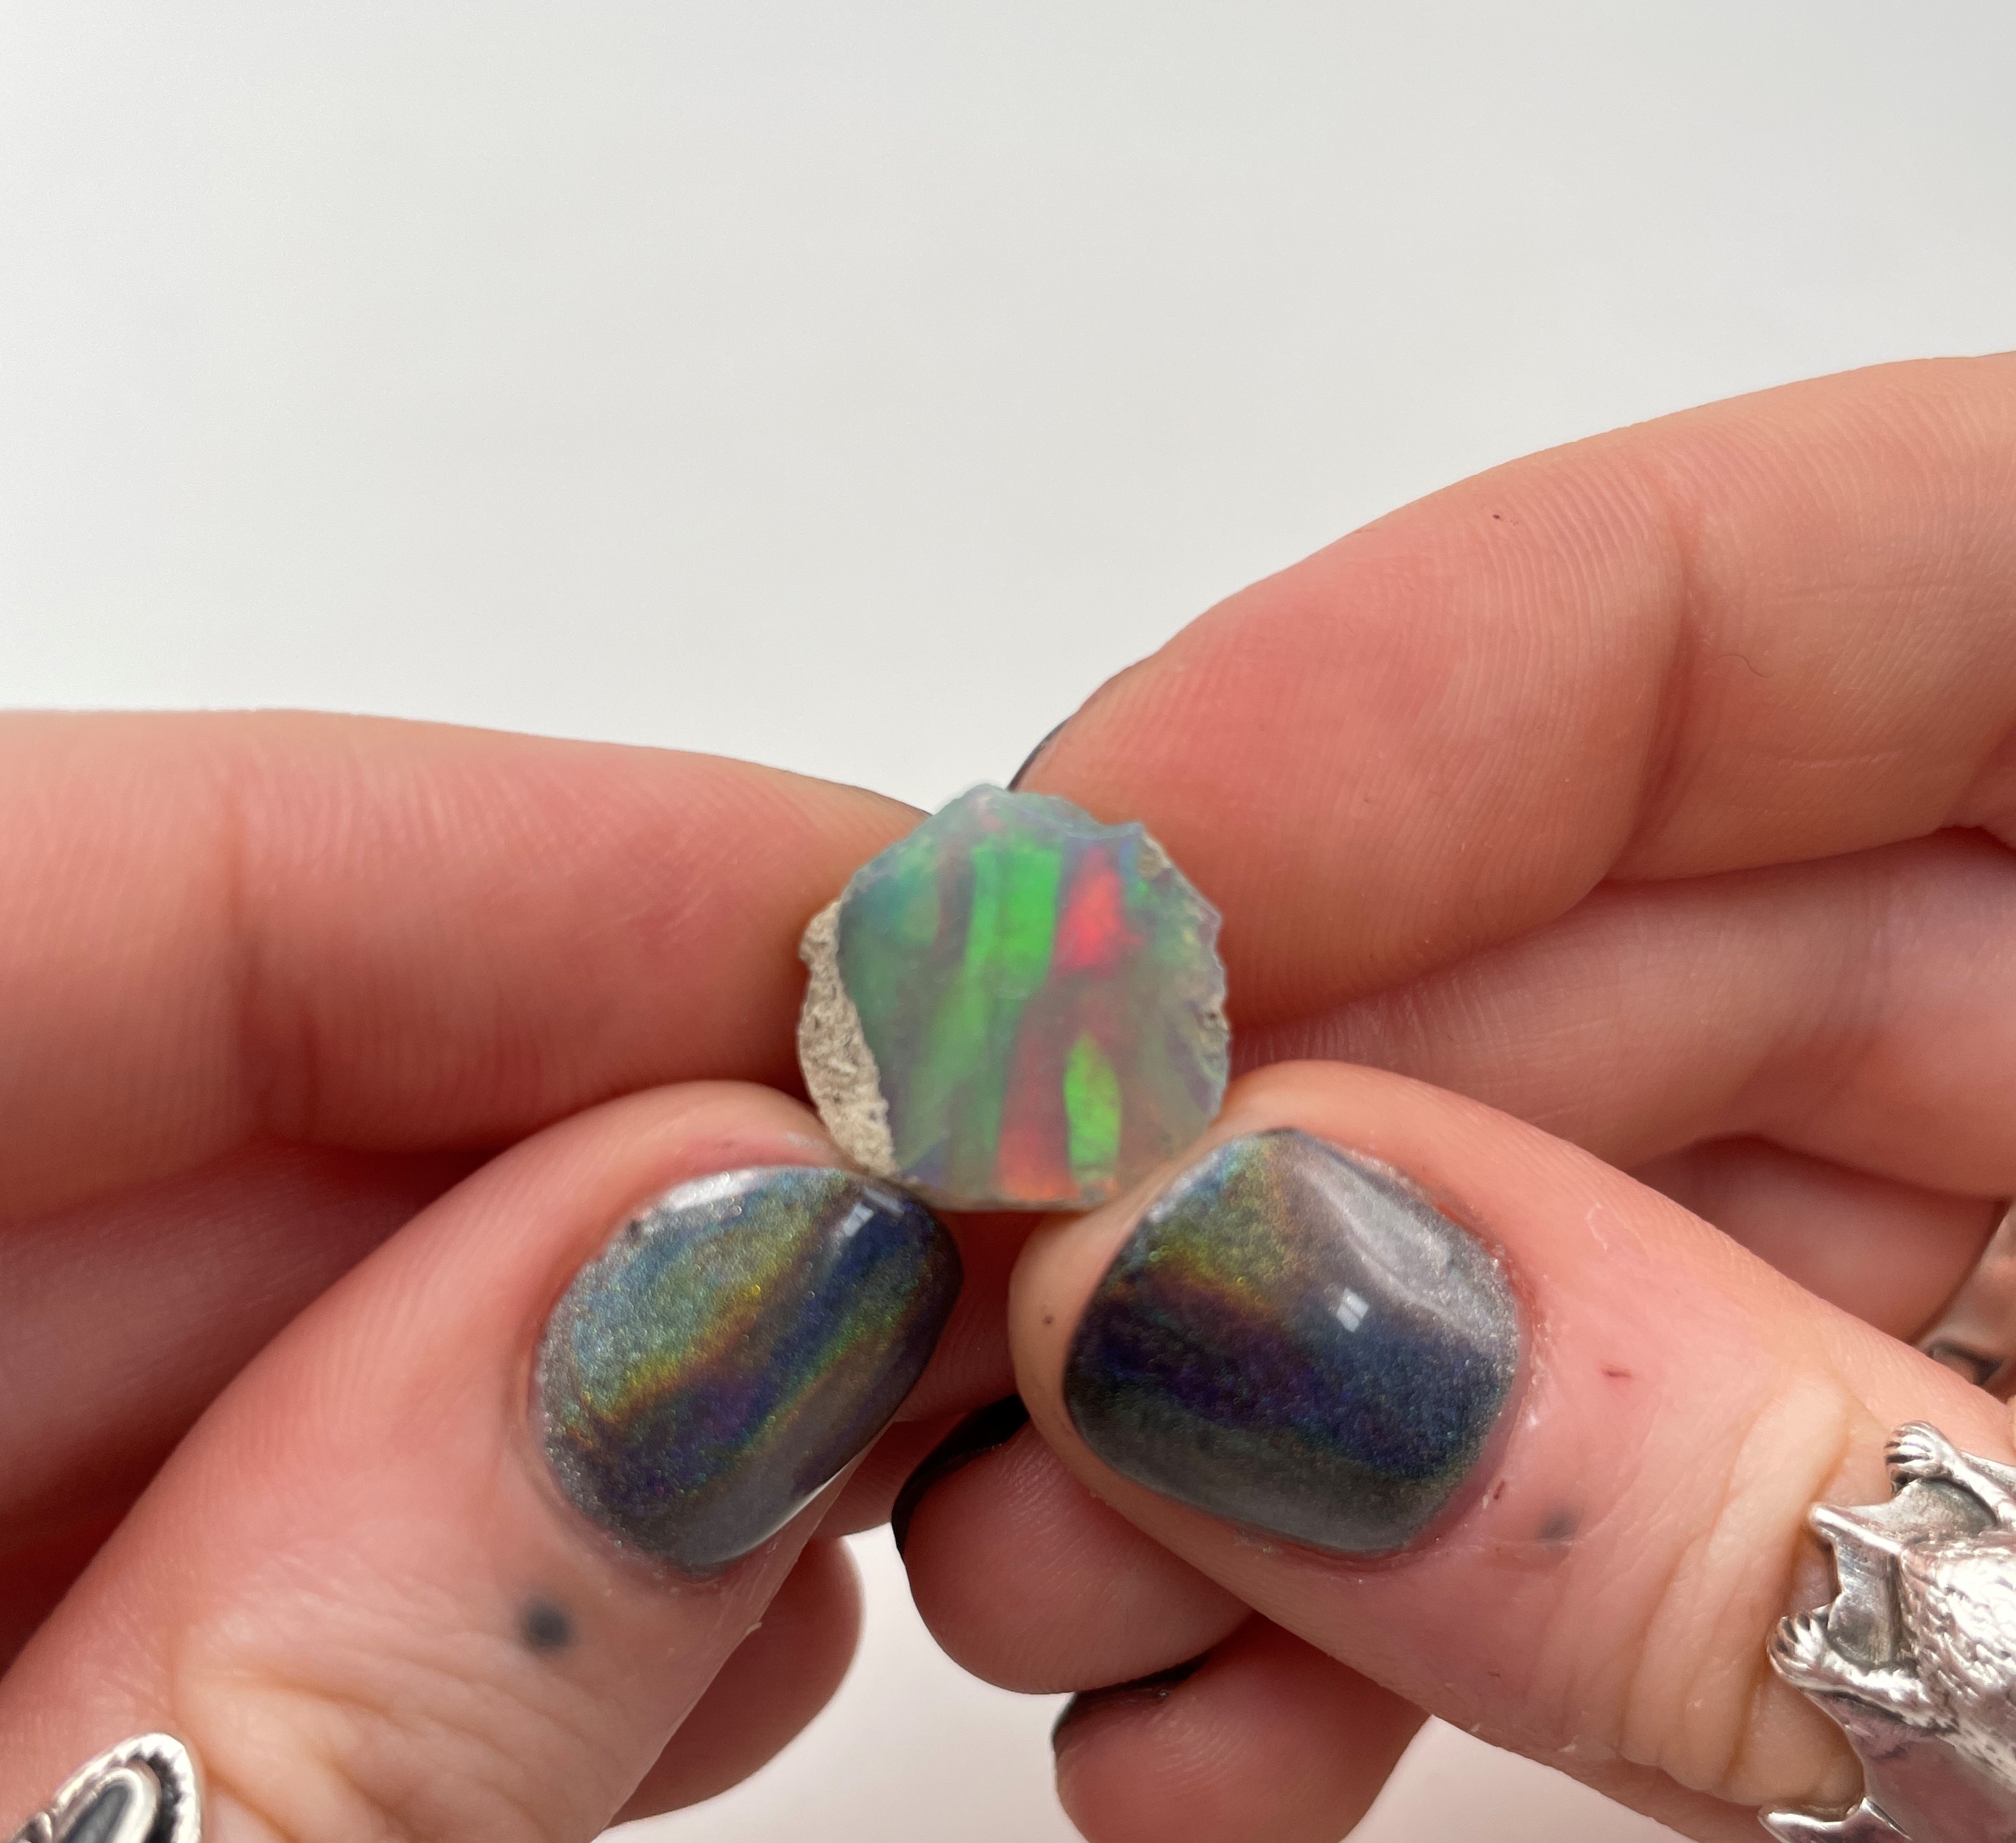 Raw Opal Tie Tack, Ethiopian Welo Opal Tie Pin. Precious Opal